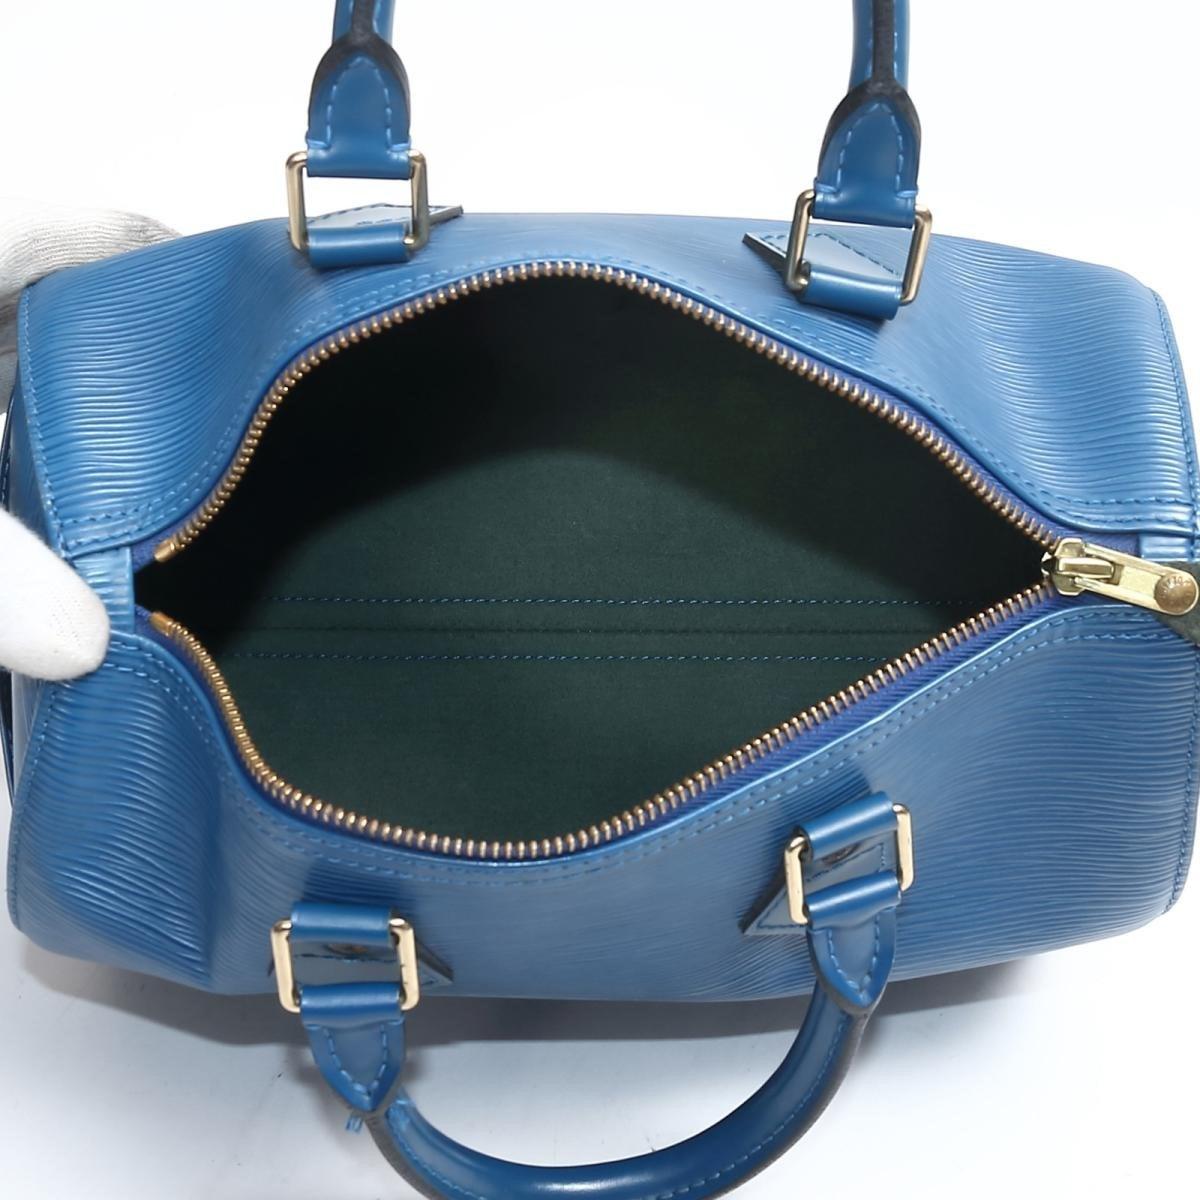 Louis Vuitton Handbag Epi Speedy 25 M43015 Toledo Blue Auction